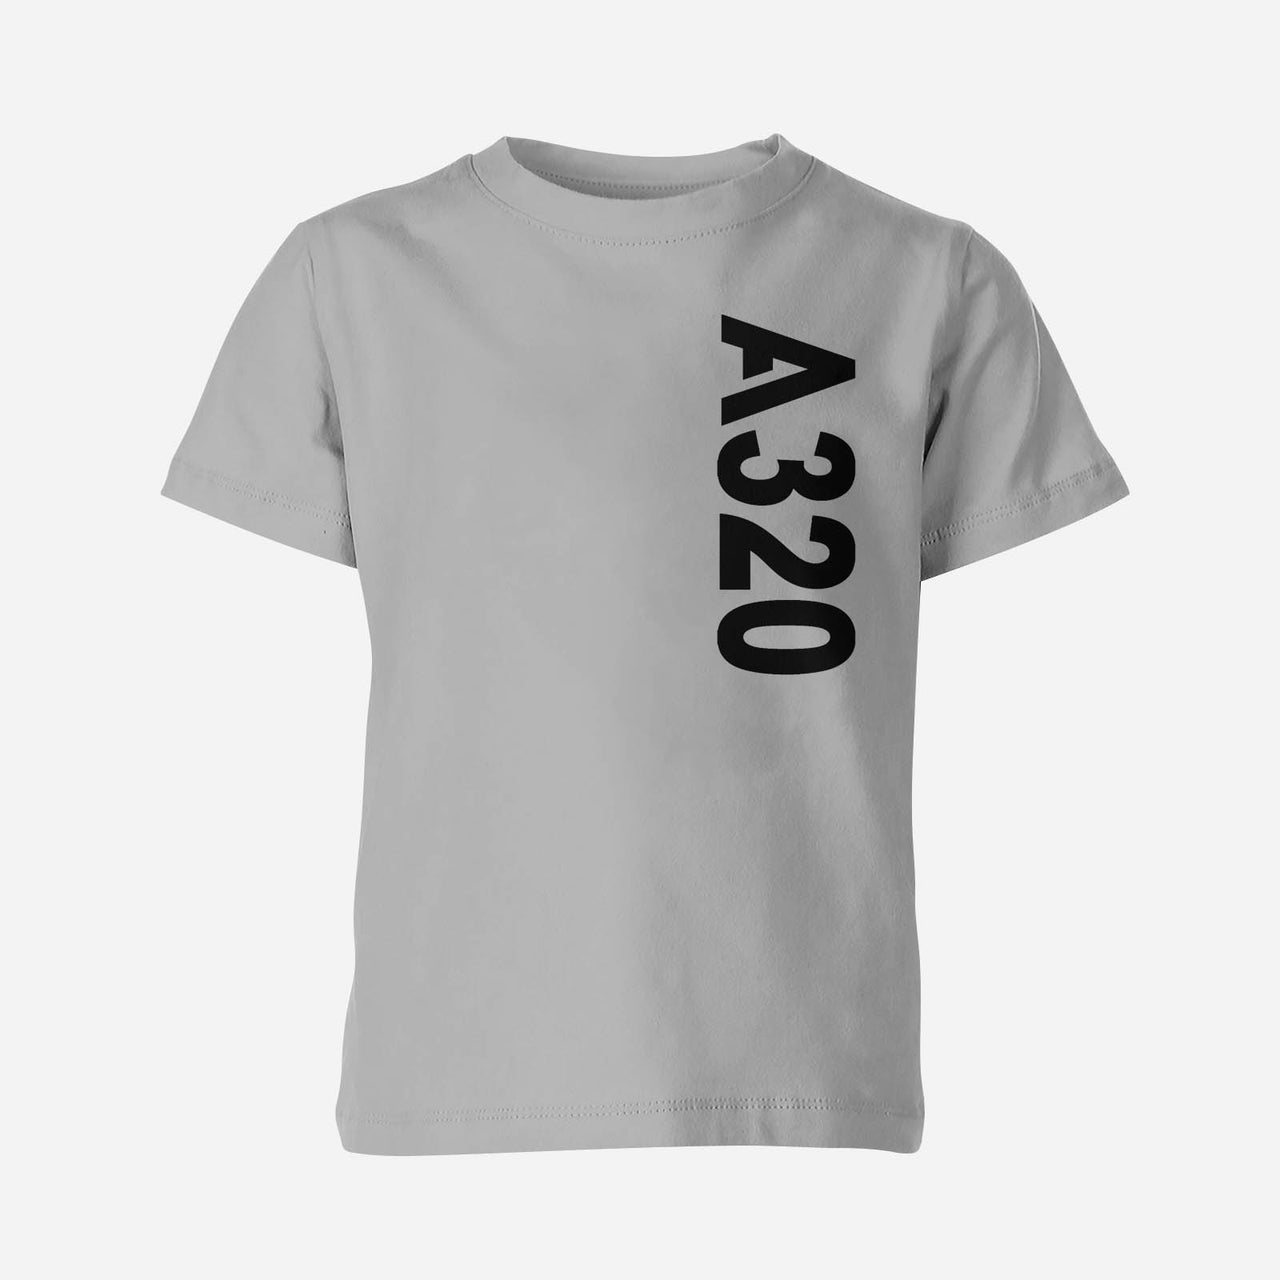 A320 Side Text Designed Children T-Shirts